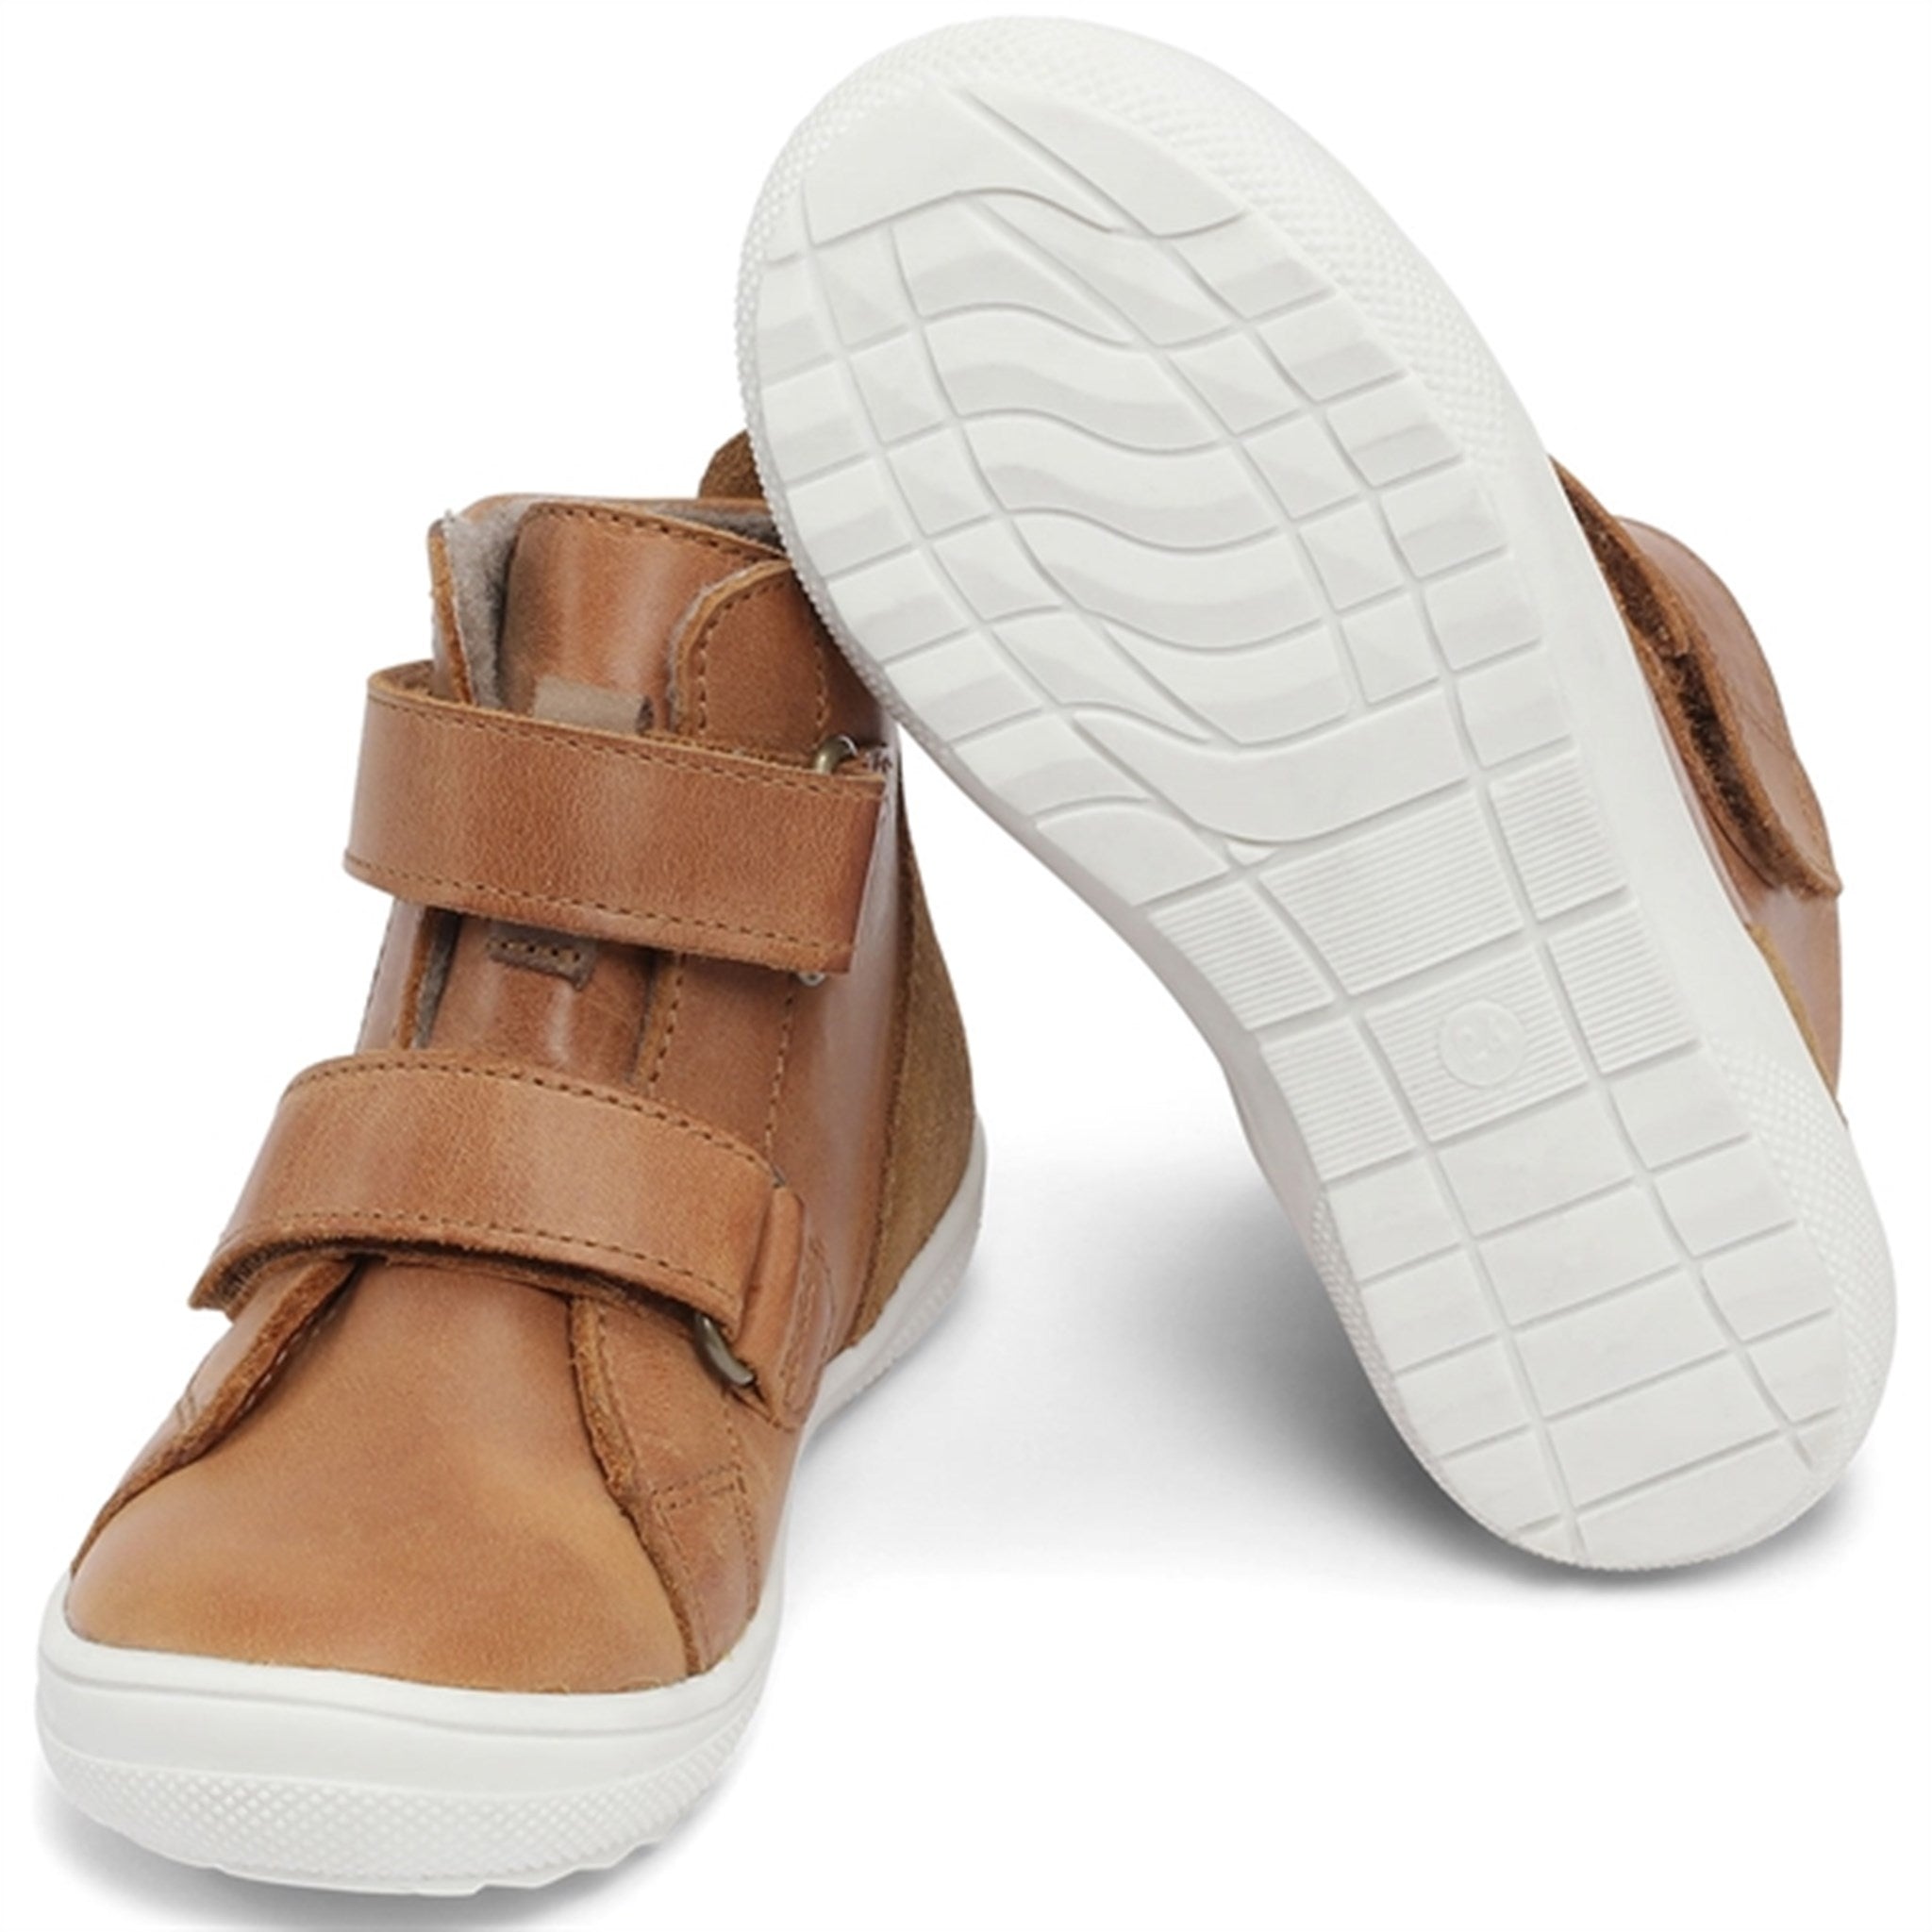 Bundgaard Storm Velcro Tex Shoes Tan 3